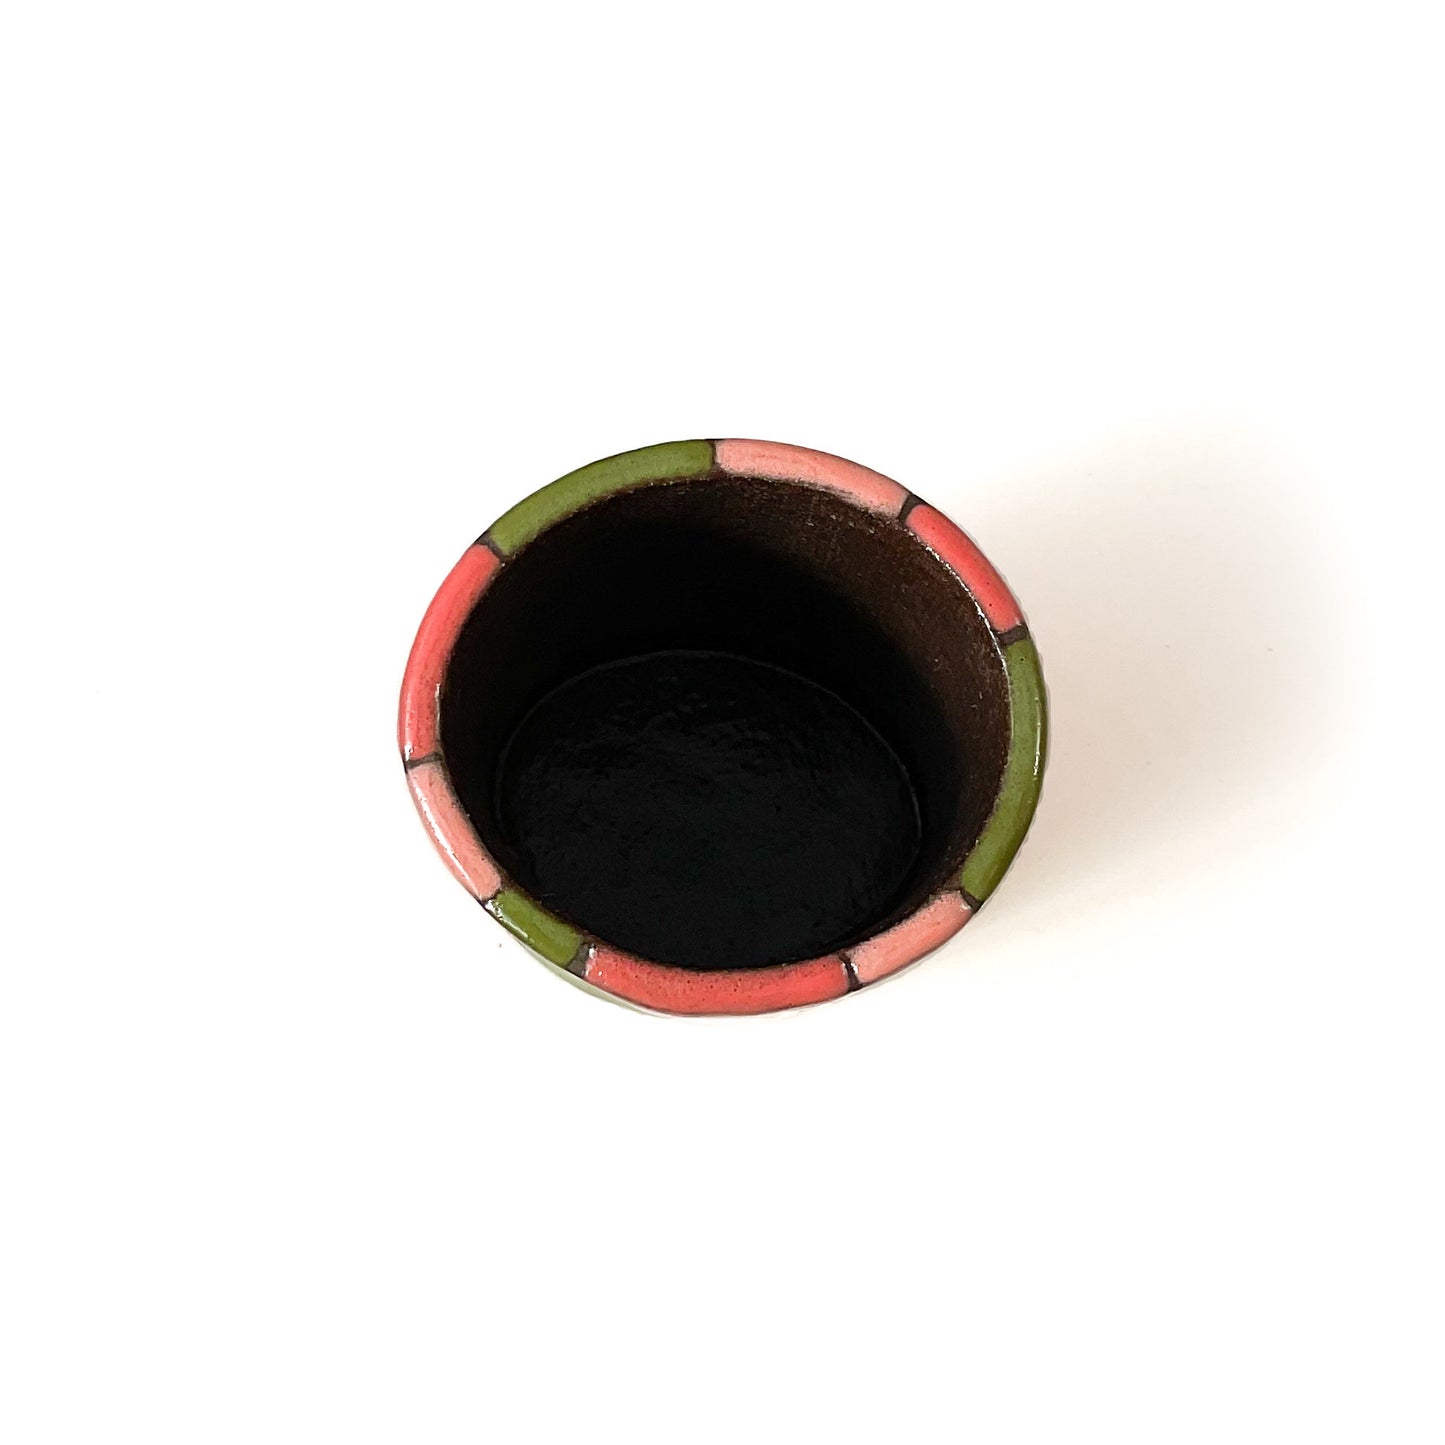 Watermelon Stripes - Black Clay Vessel